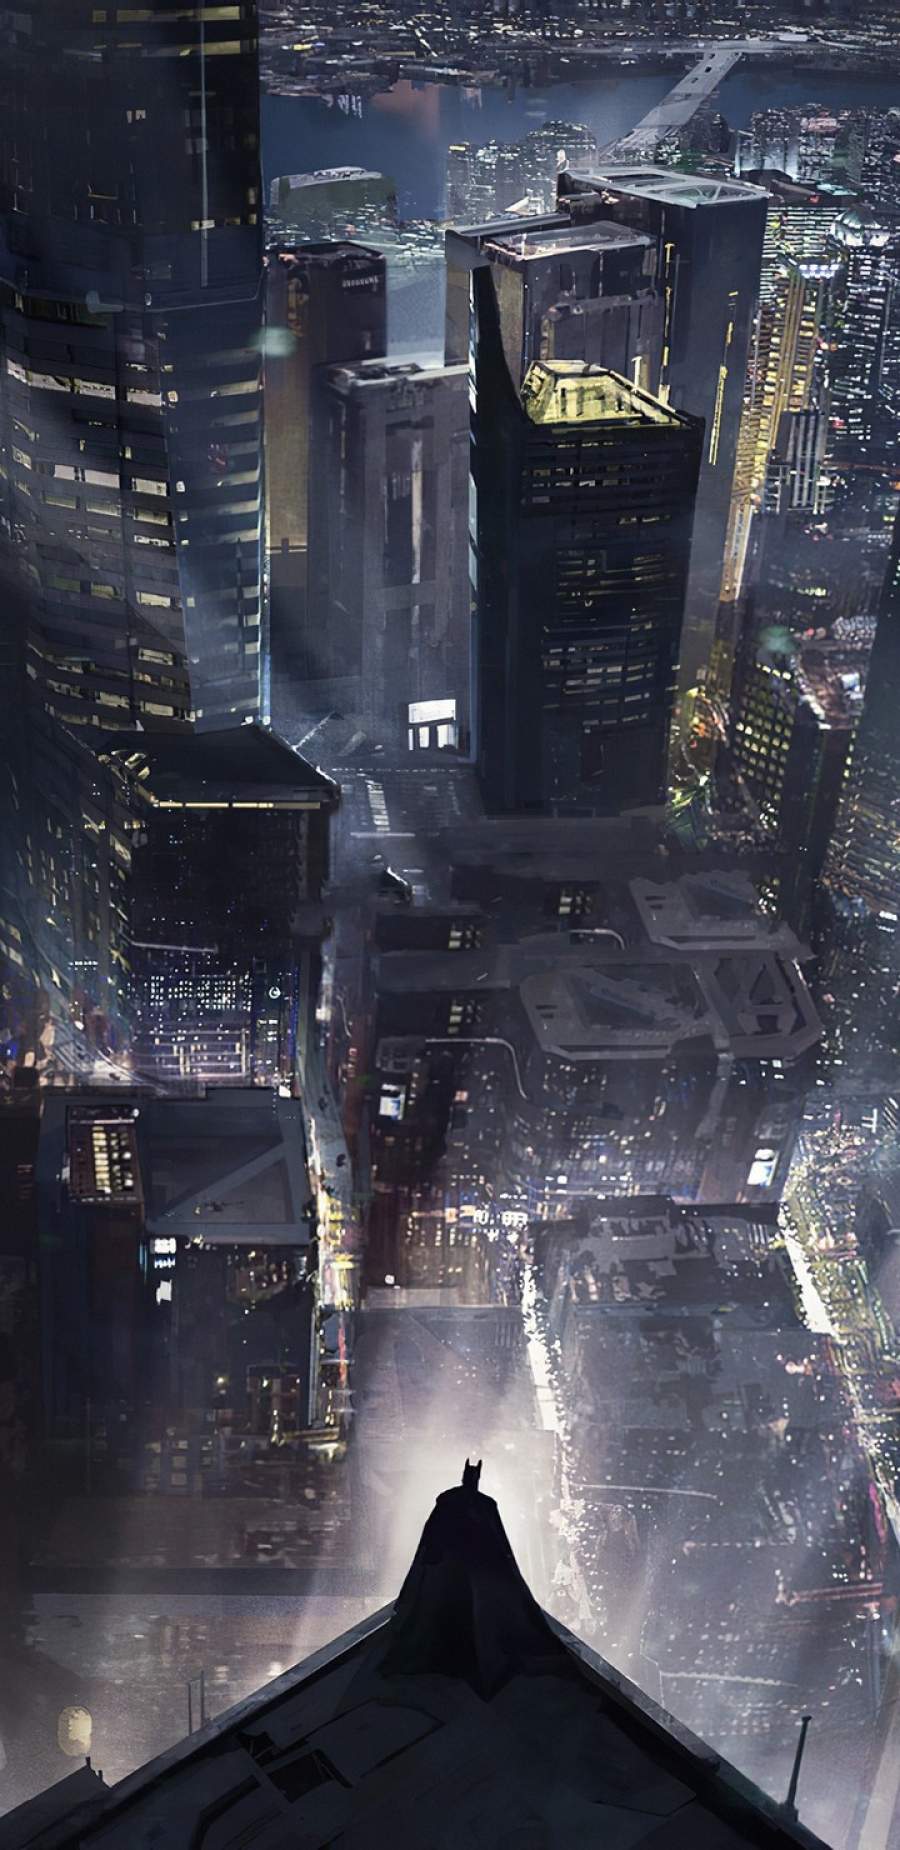 Batman Gotham City IPhone Wallpaper - IPhone Wallpapers : iPhone Wallpapers